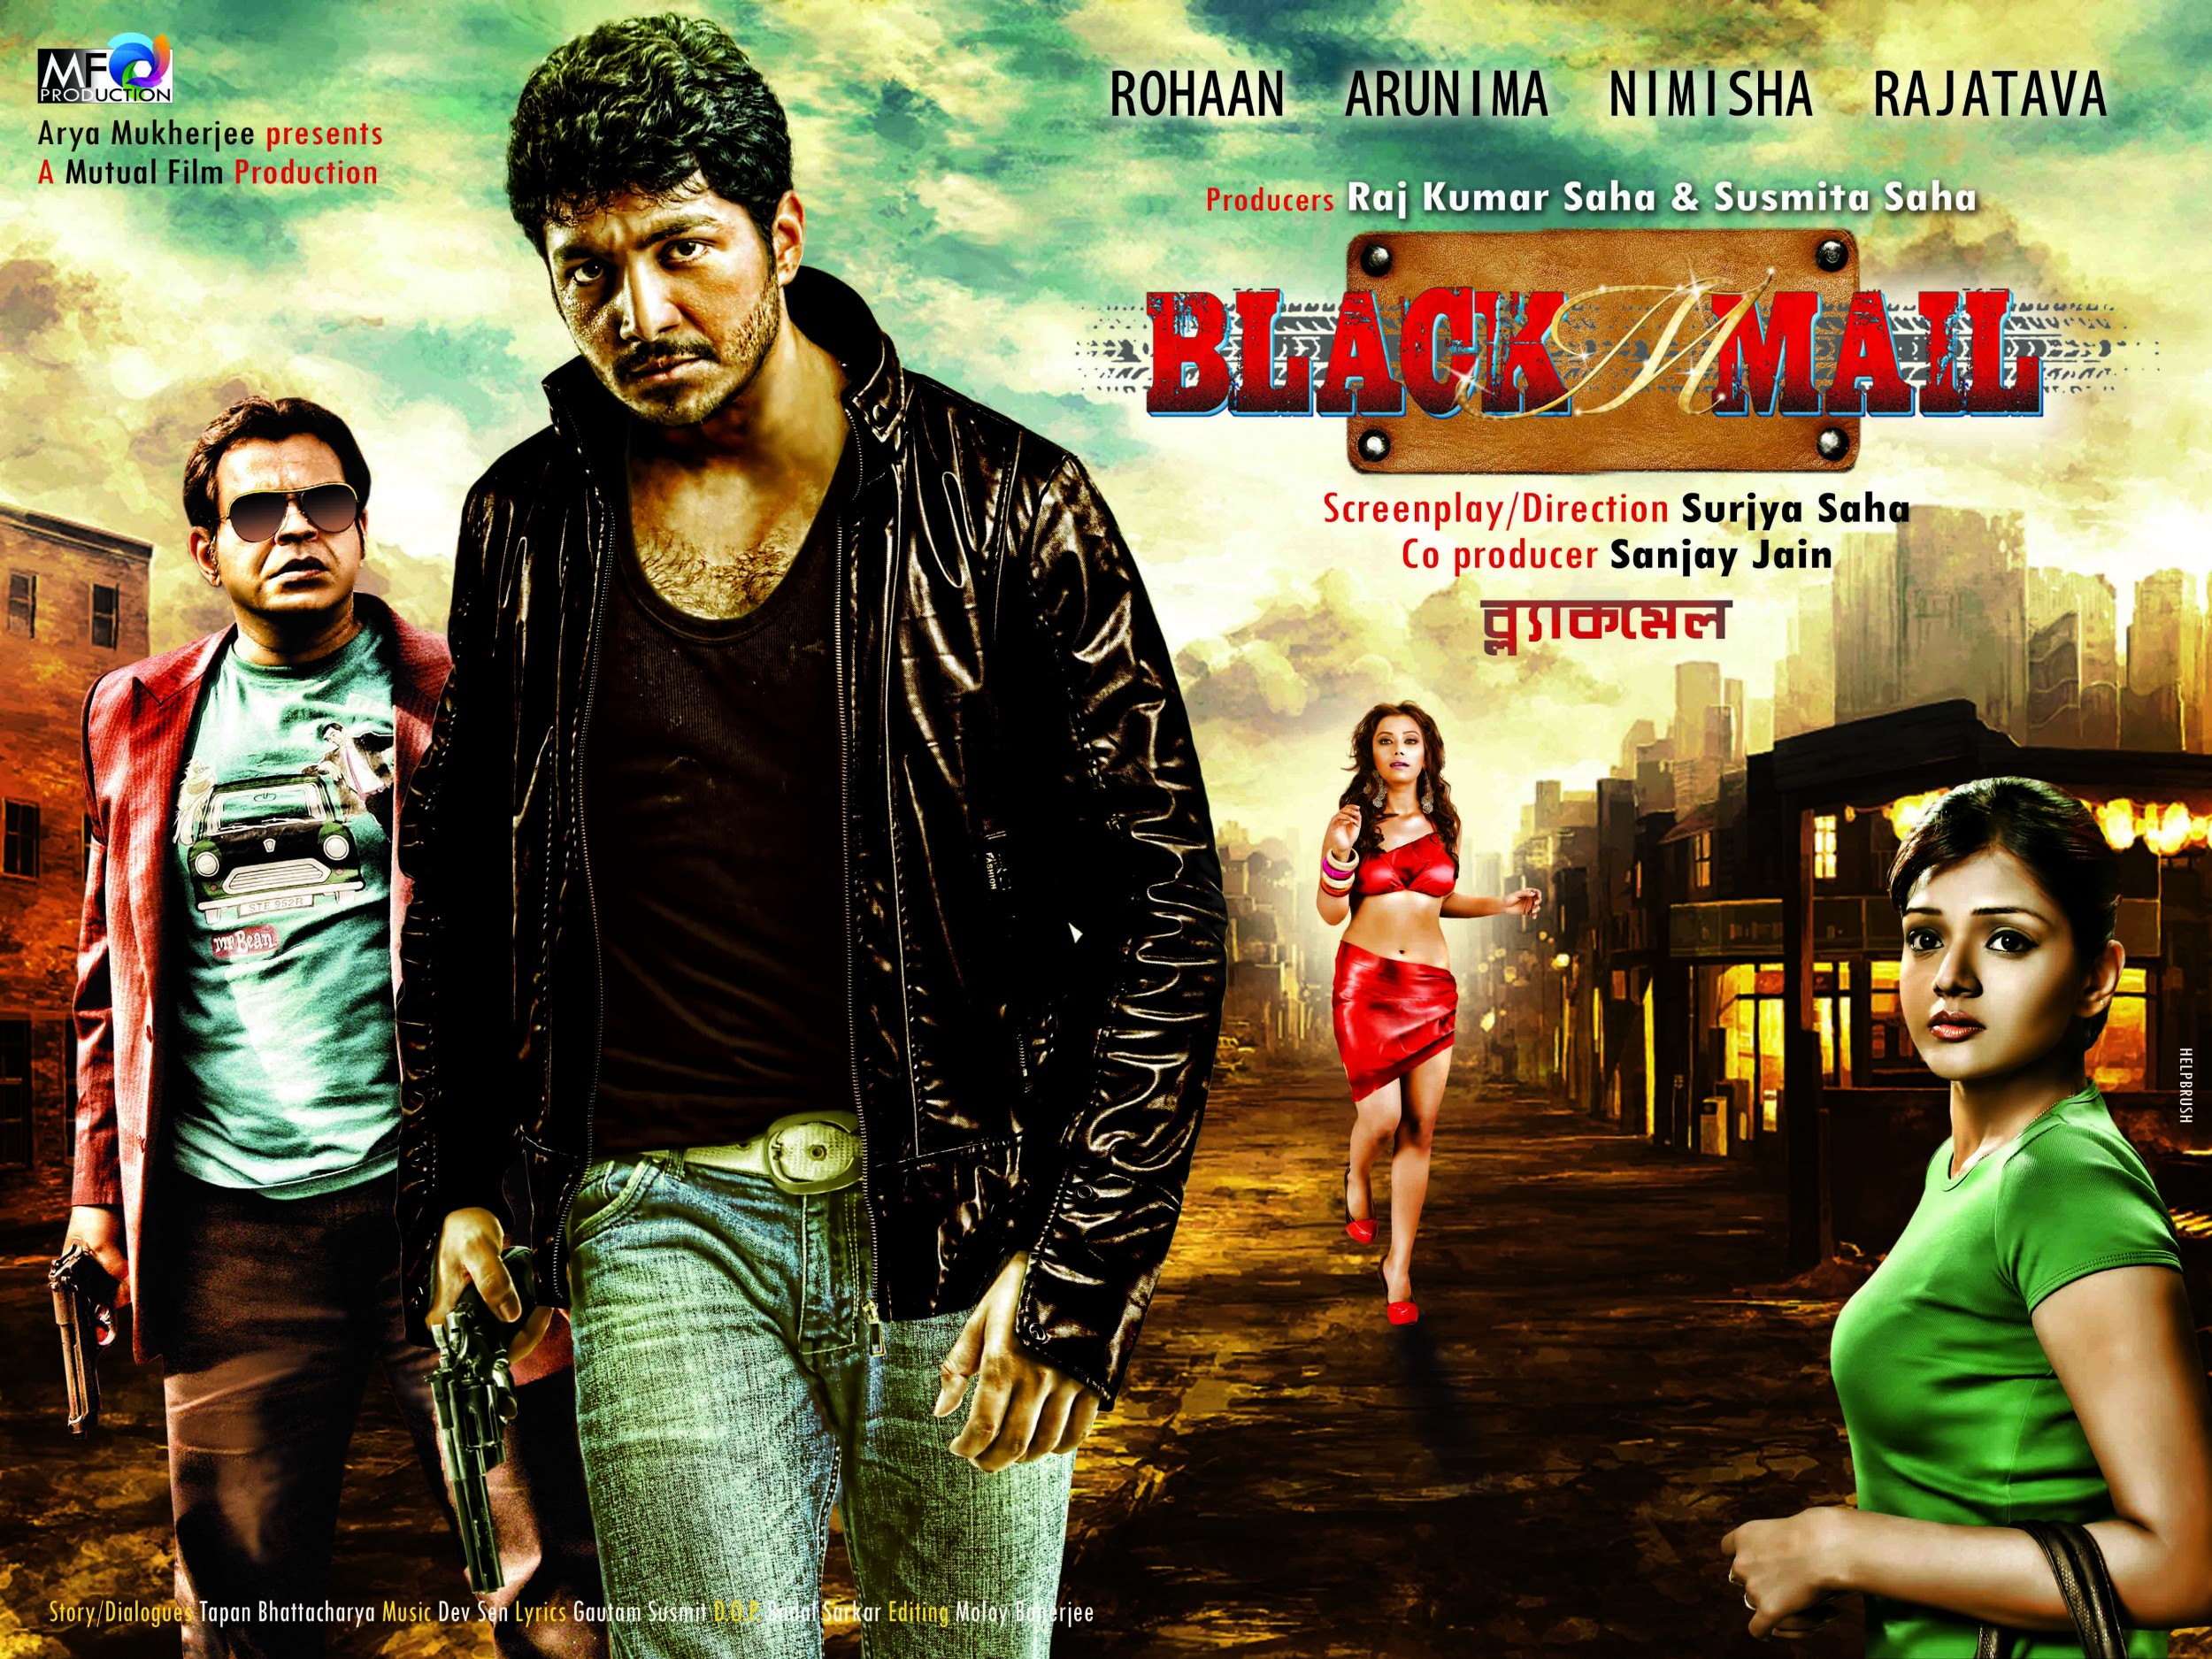 Mega Sized Movie Poster Image for Black Mmail (#5 of 9)